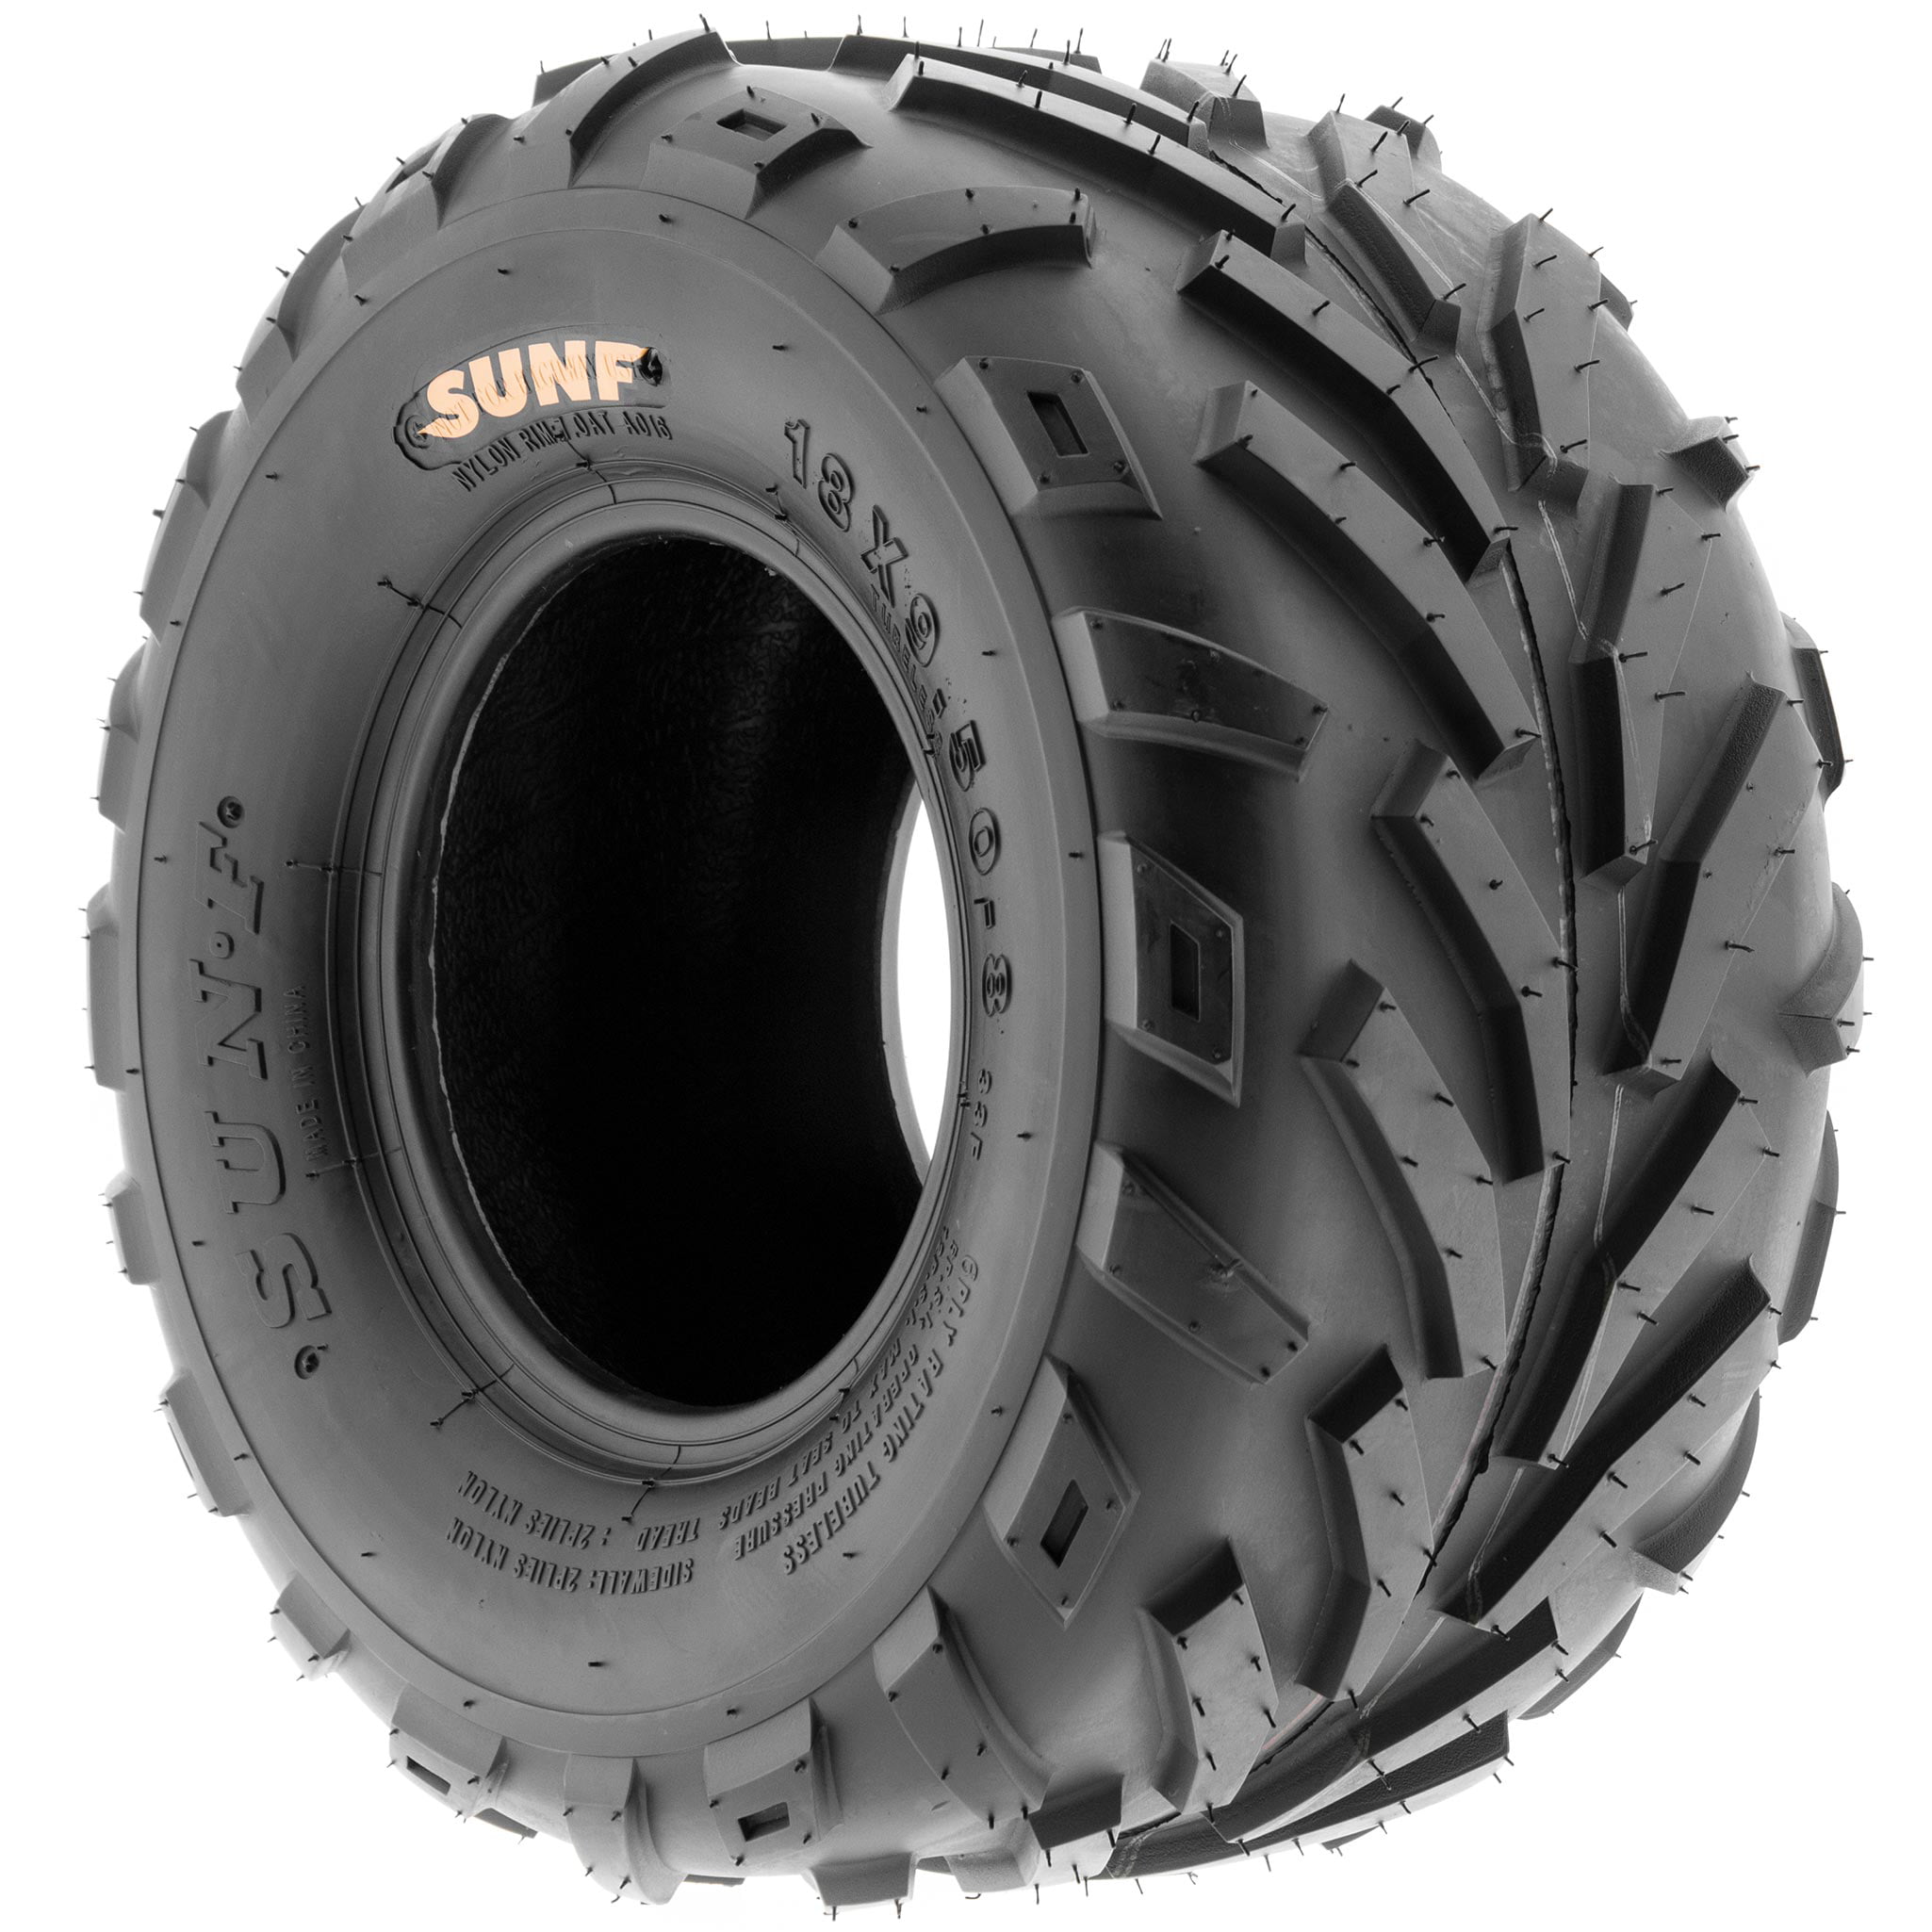 SunF All Terrain Race Replacement ATV UTV 6 Ply Tires 18x9.5-8 18x9.5x8 Tubeless A016, Set of 4 